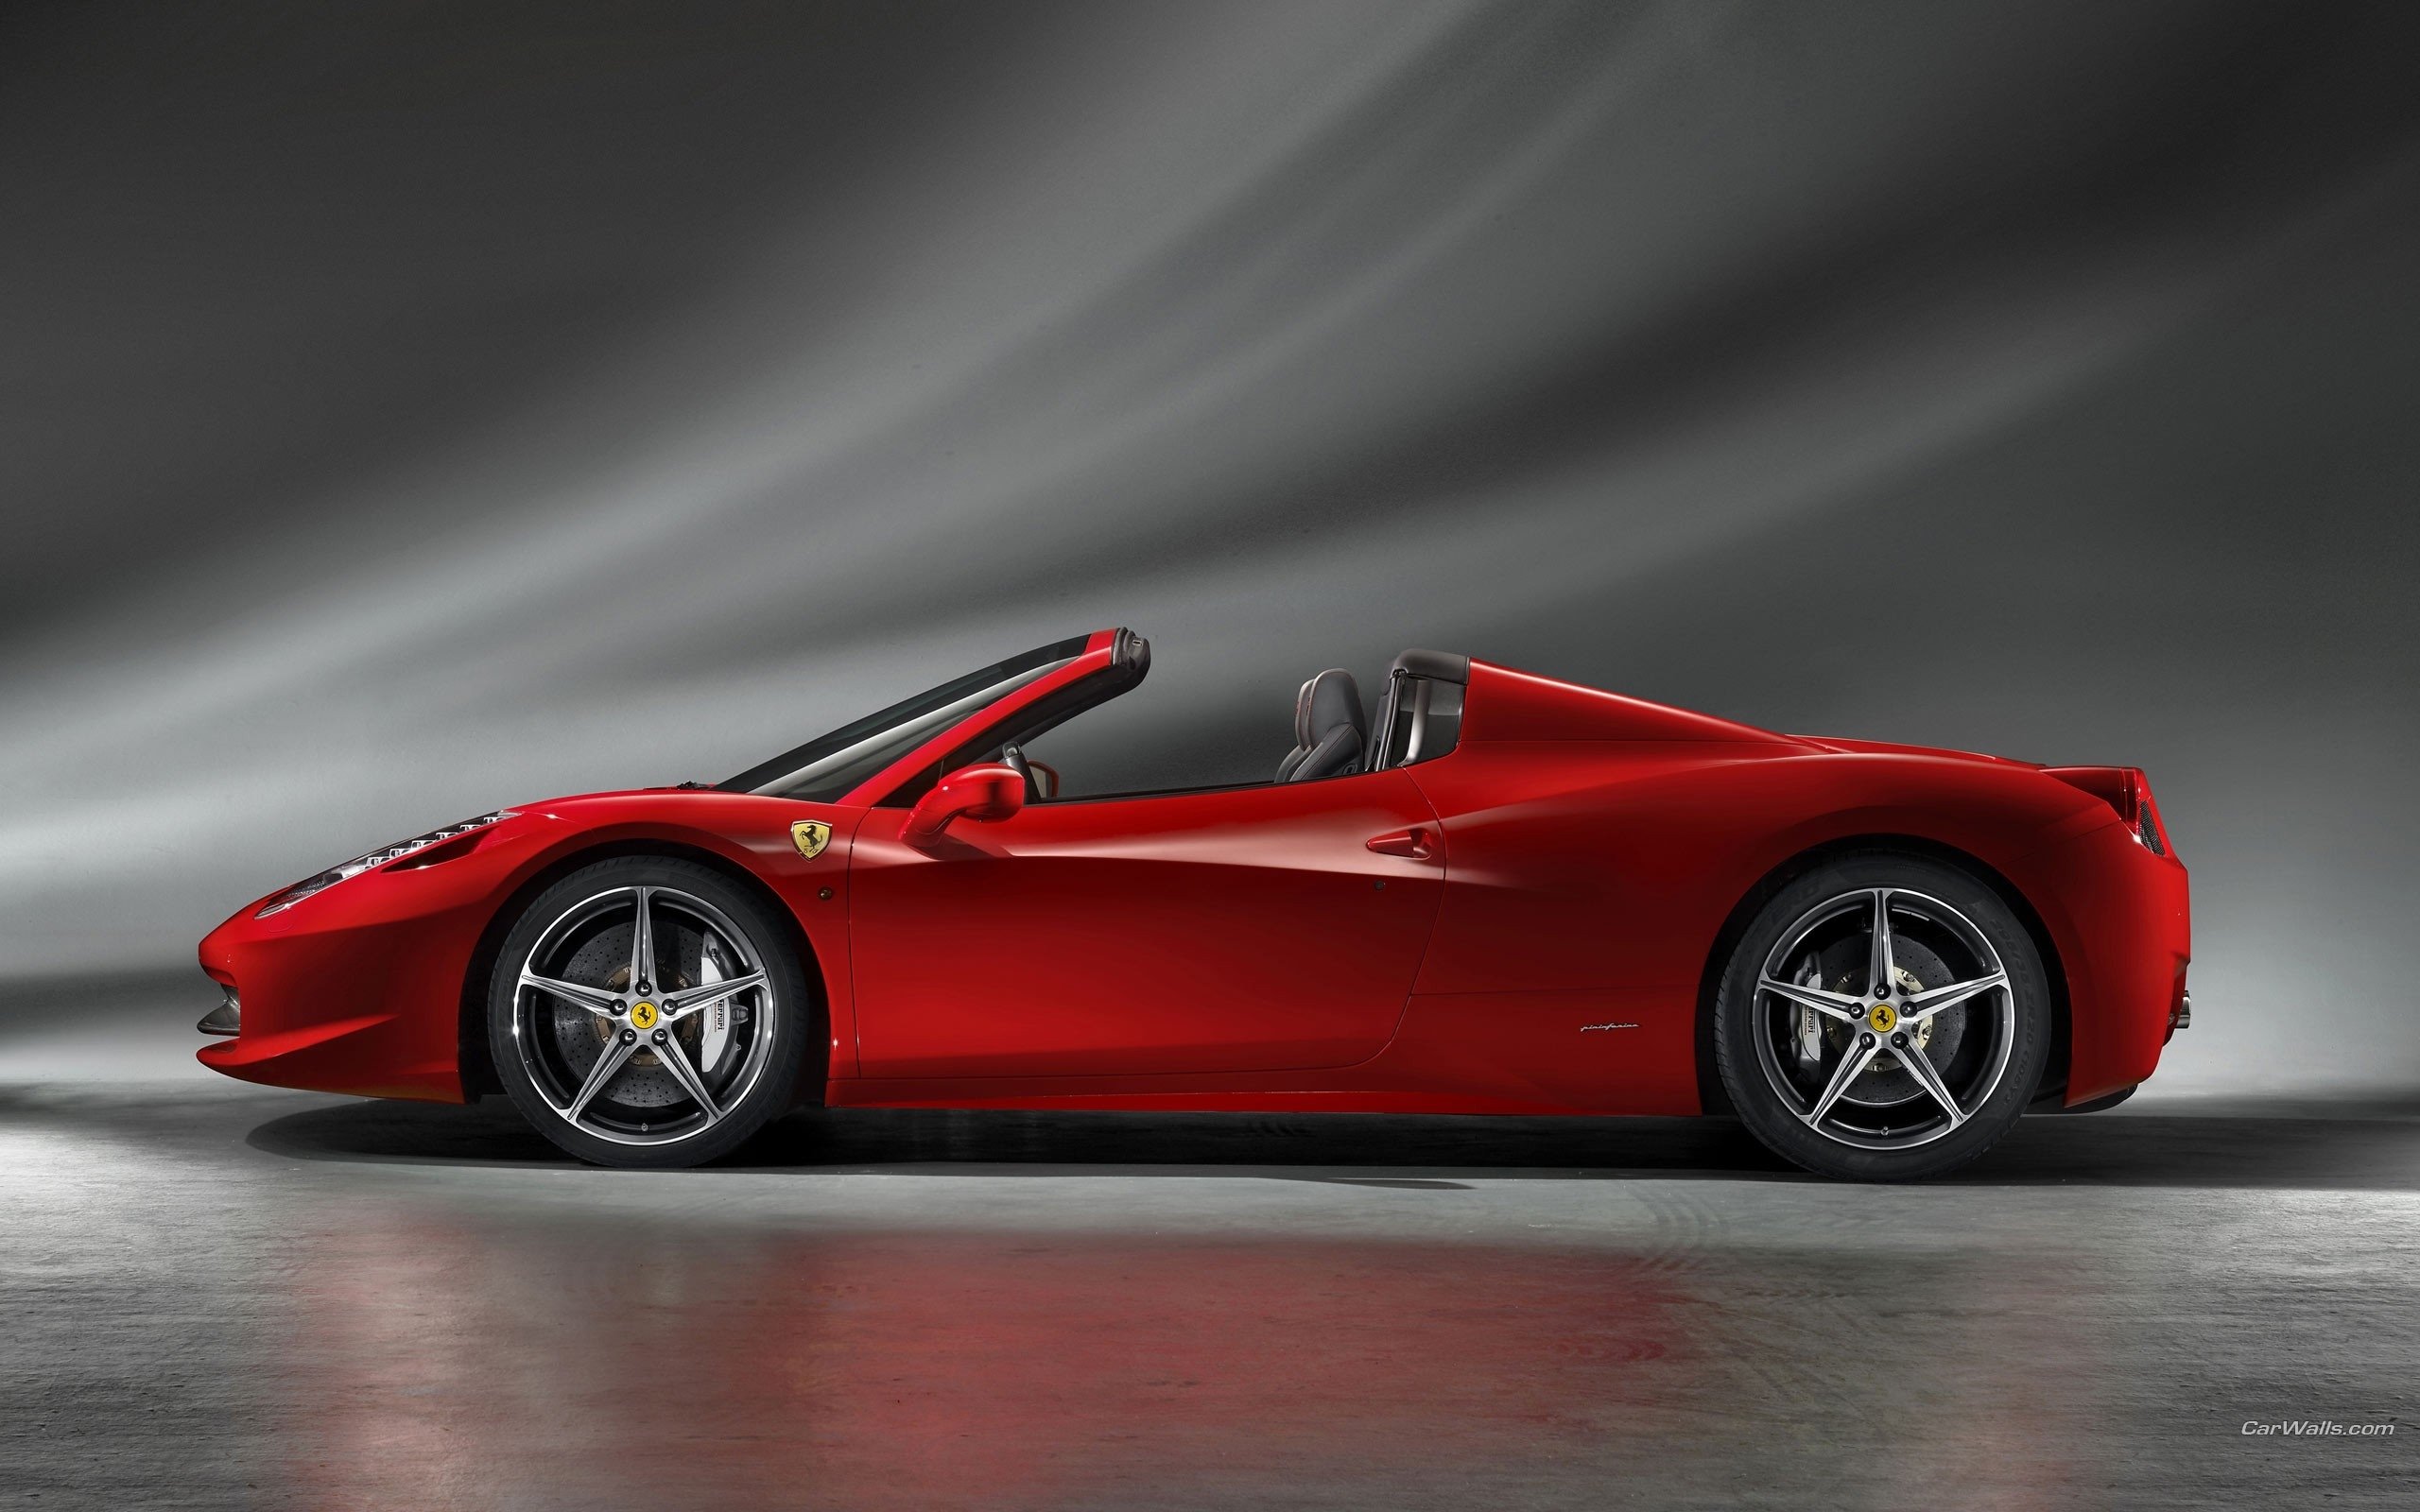 Best Ferrari 458 Spider wallpaper ID:436252 for High Resolution hd 2560x1600 PC